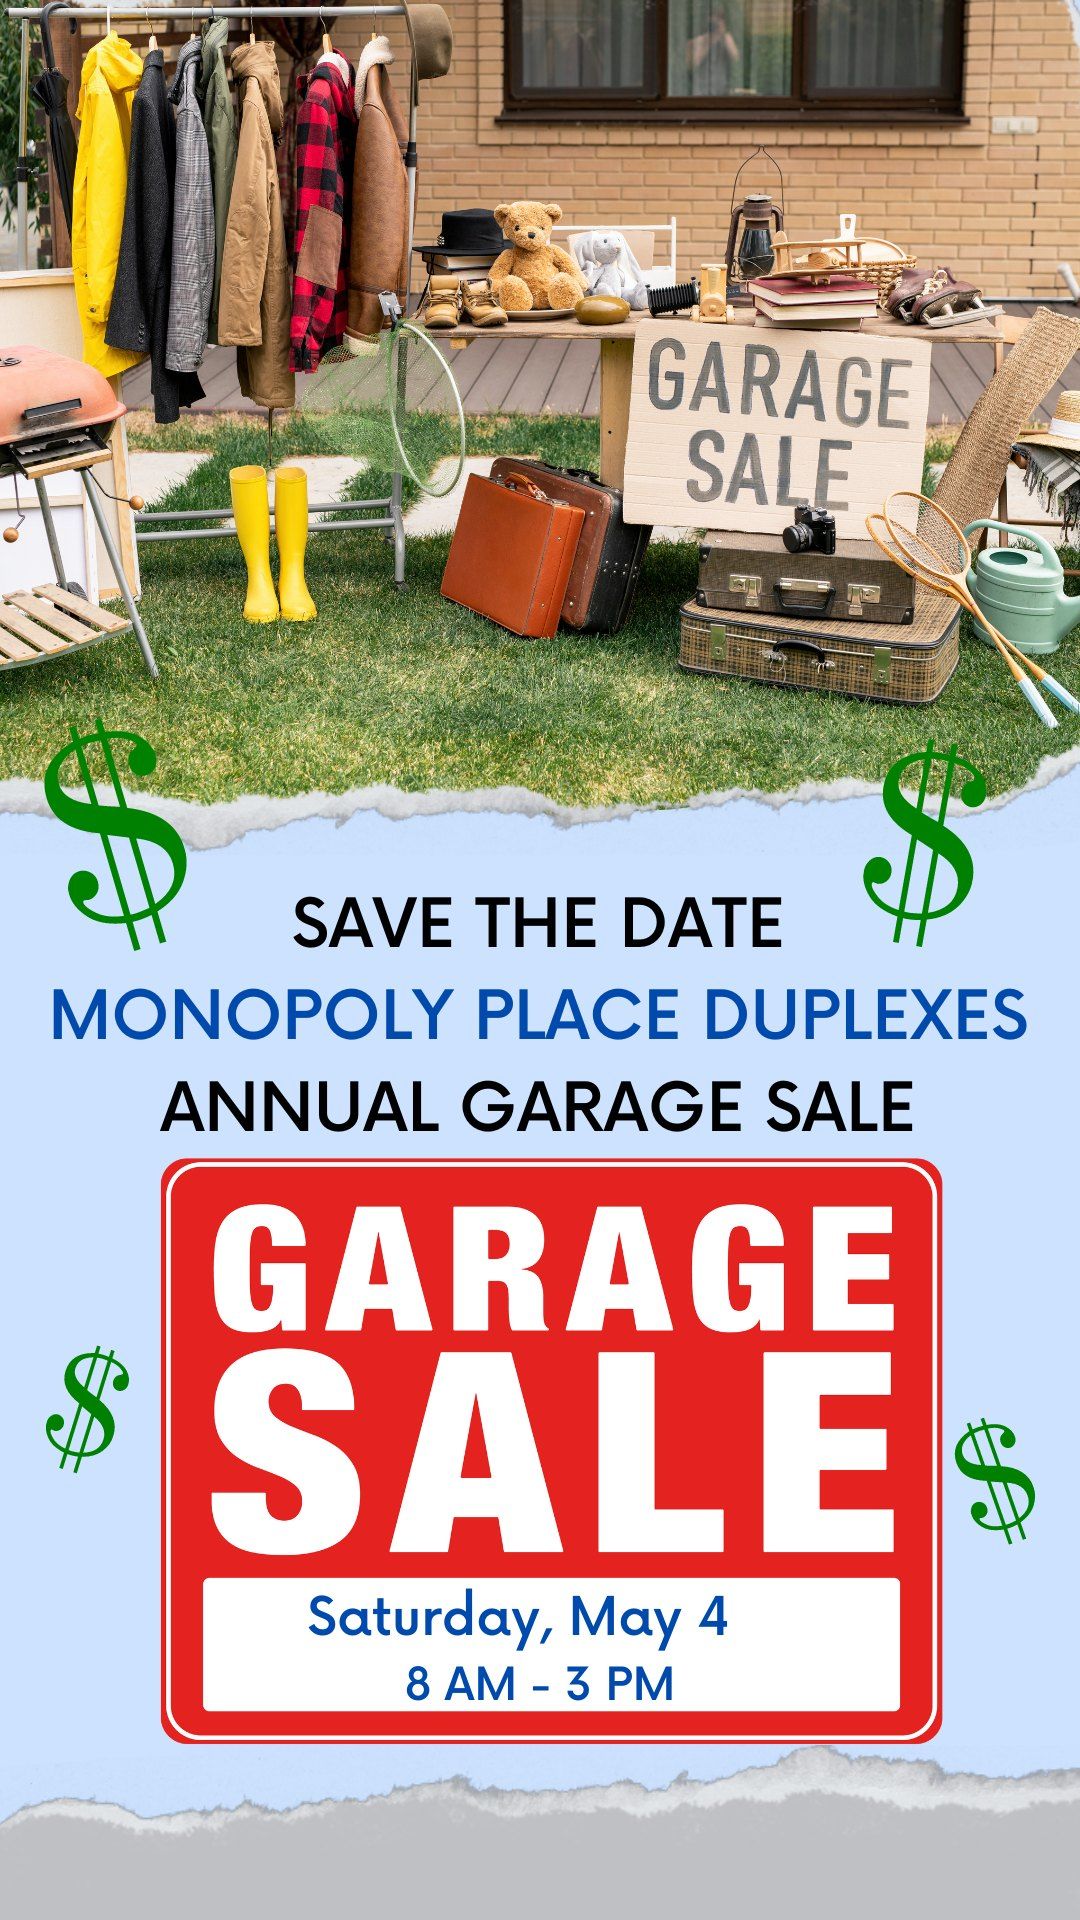 Monopoly Place Duplexes Annual Garage Sale